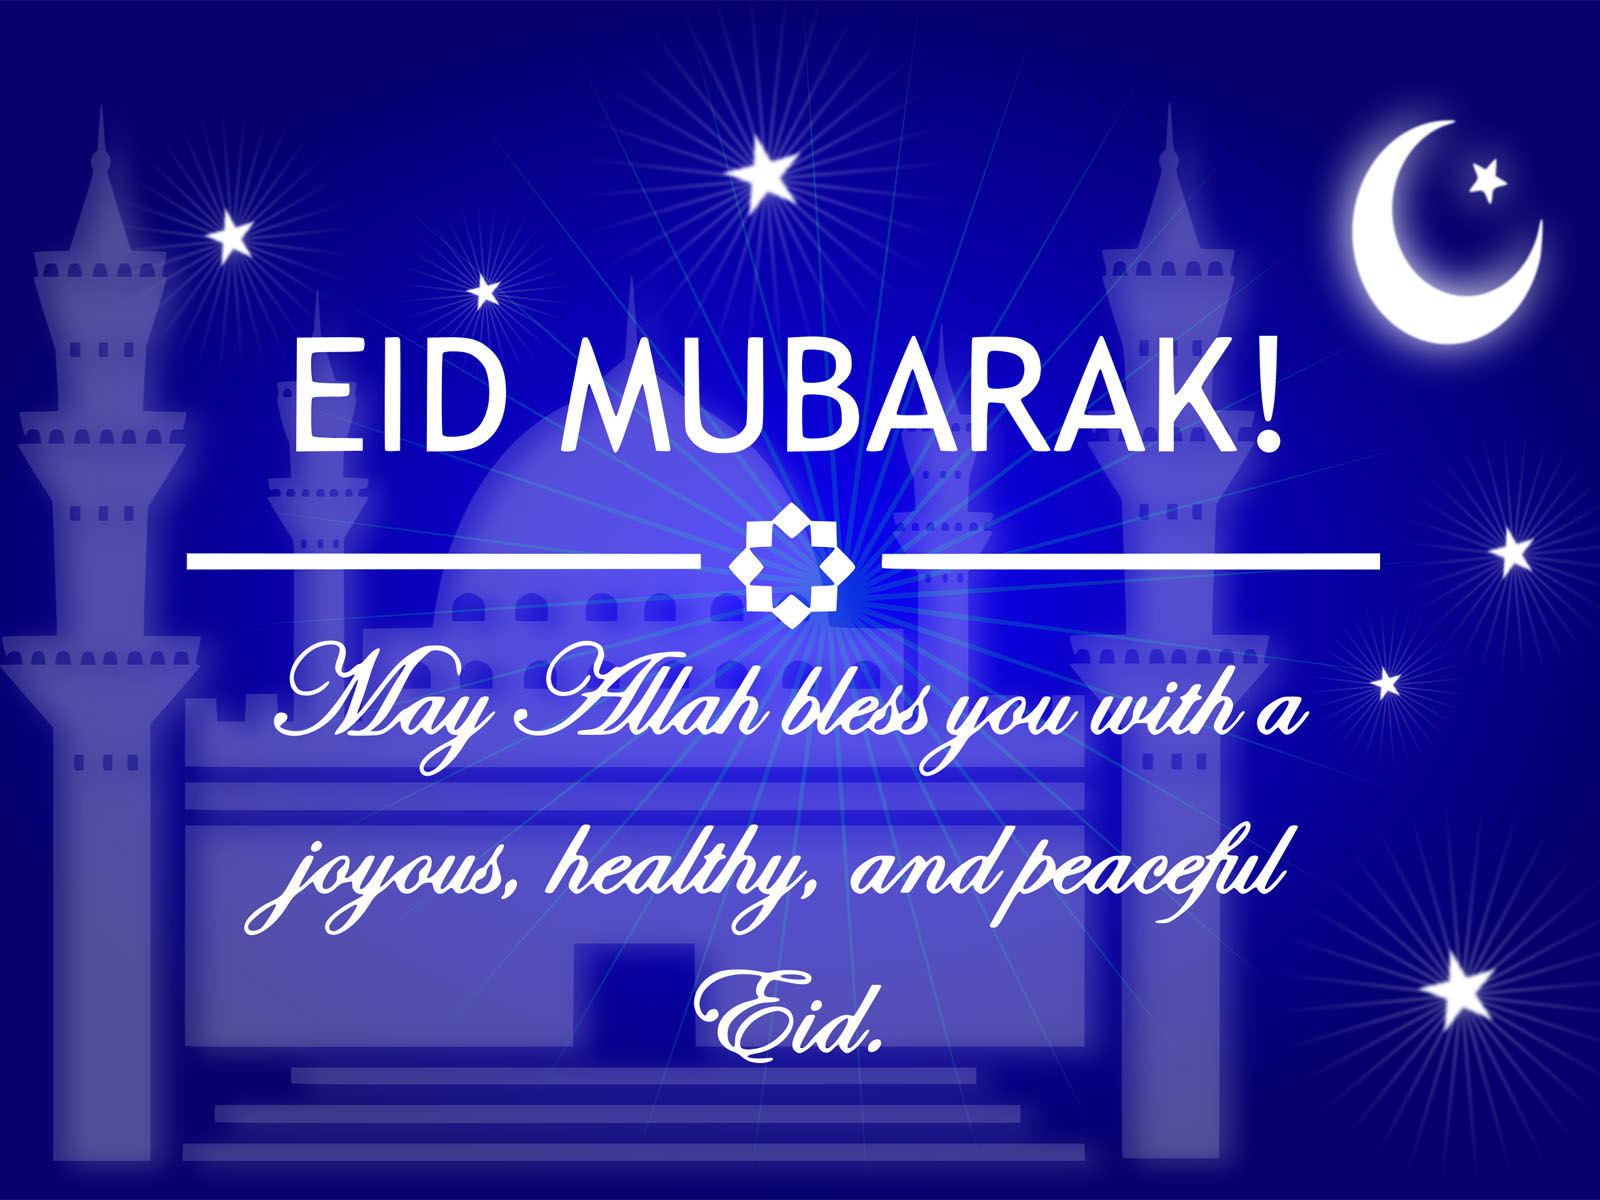 Eid Mubarak Universal Greetings Backgrounds | Religious Templates